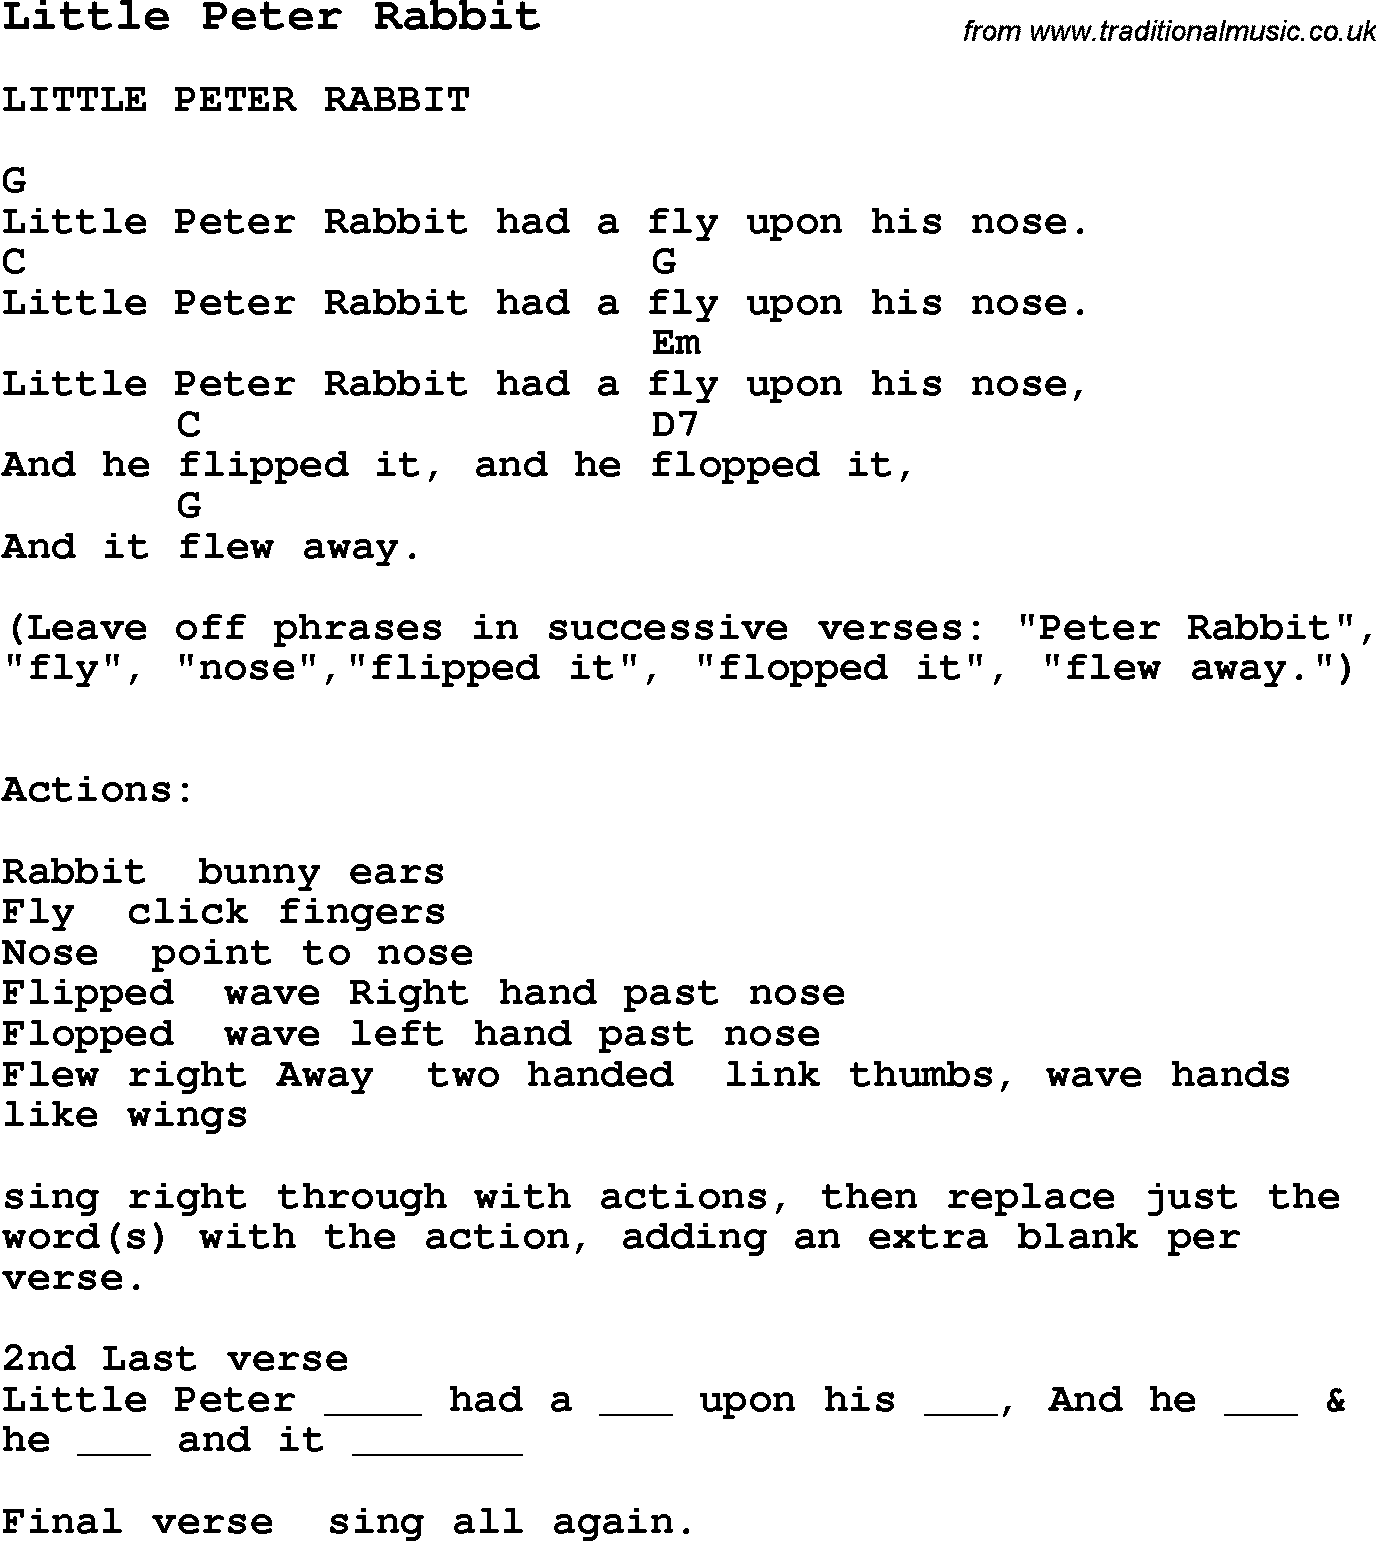 Summer-Camp Song, Little Peter Rabbit, with lyrics and chords for Ukulele, Guitar Banjo etc.